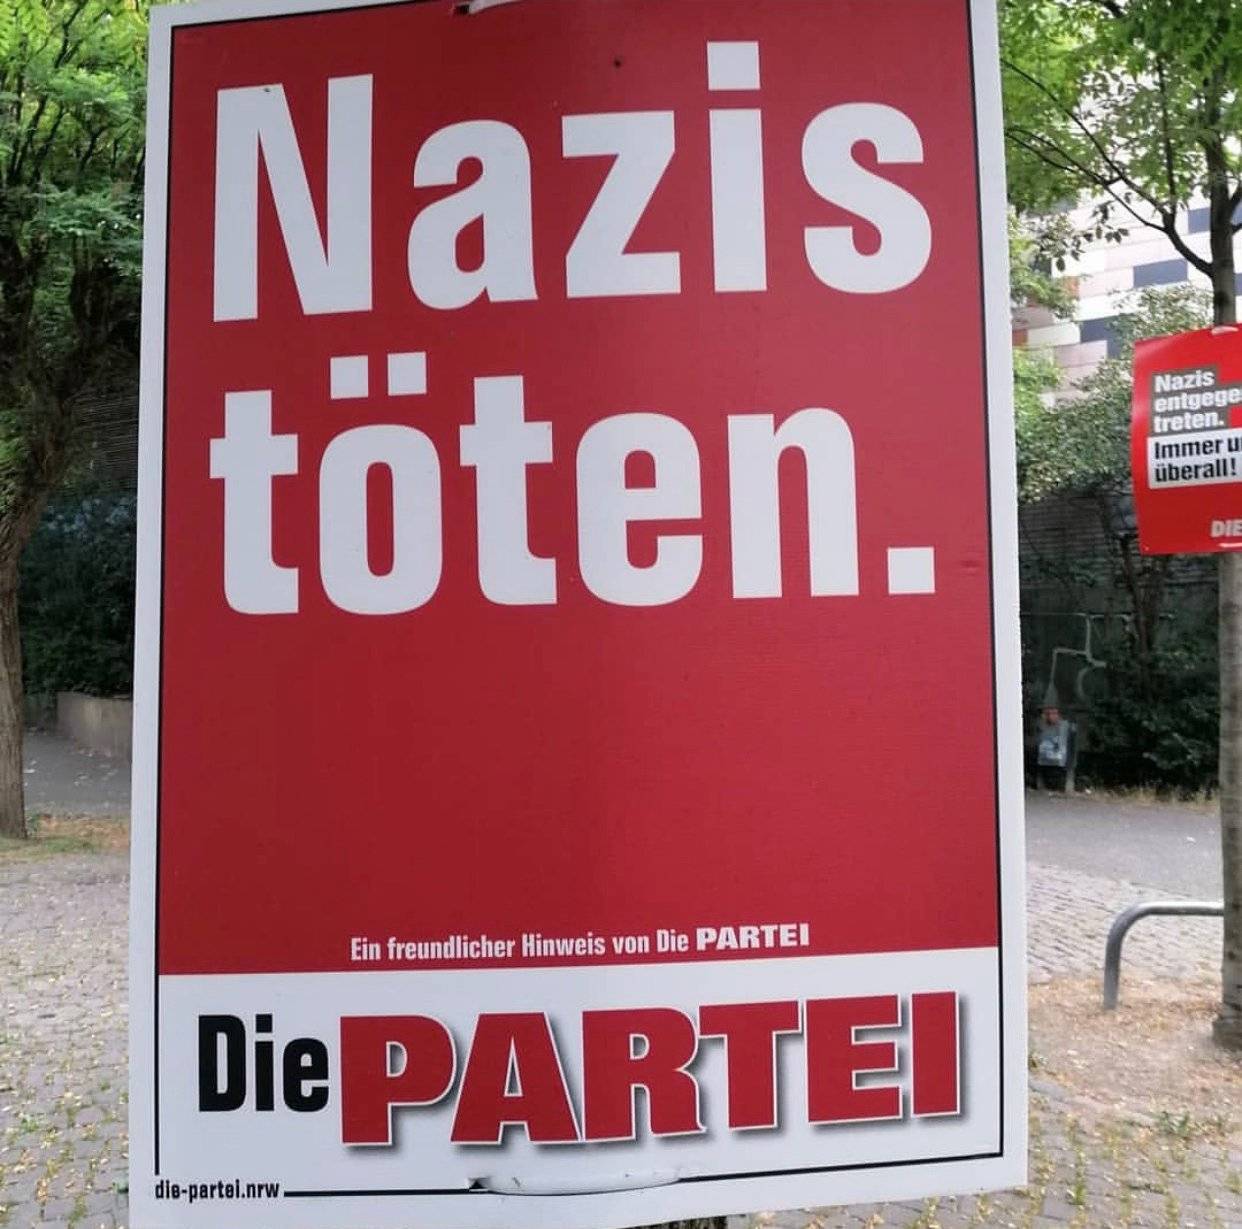 Wahlplakat mit dem Slogan „Nazis töten“